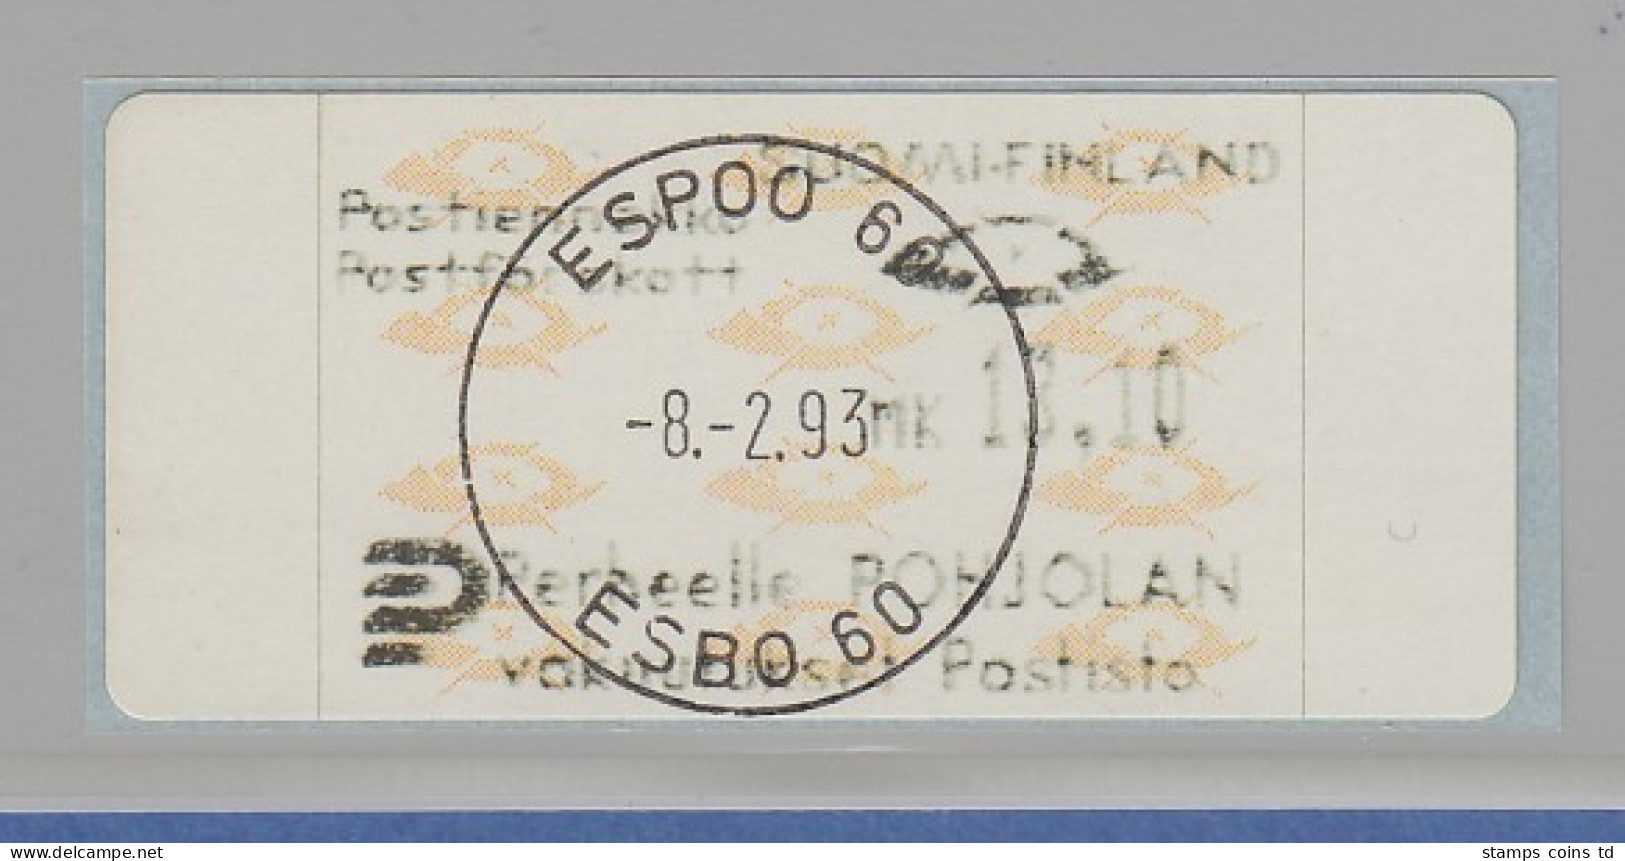 Finnland 1993 Dassault-ATM Mi.-Nr. 12.3 Z5 Gestempelt ESPOO 8.2.93. - Machine Labels [ATM]